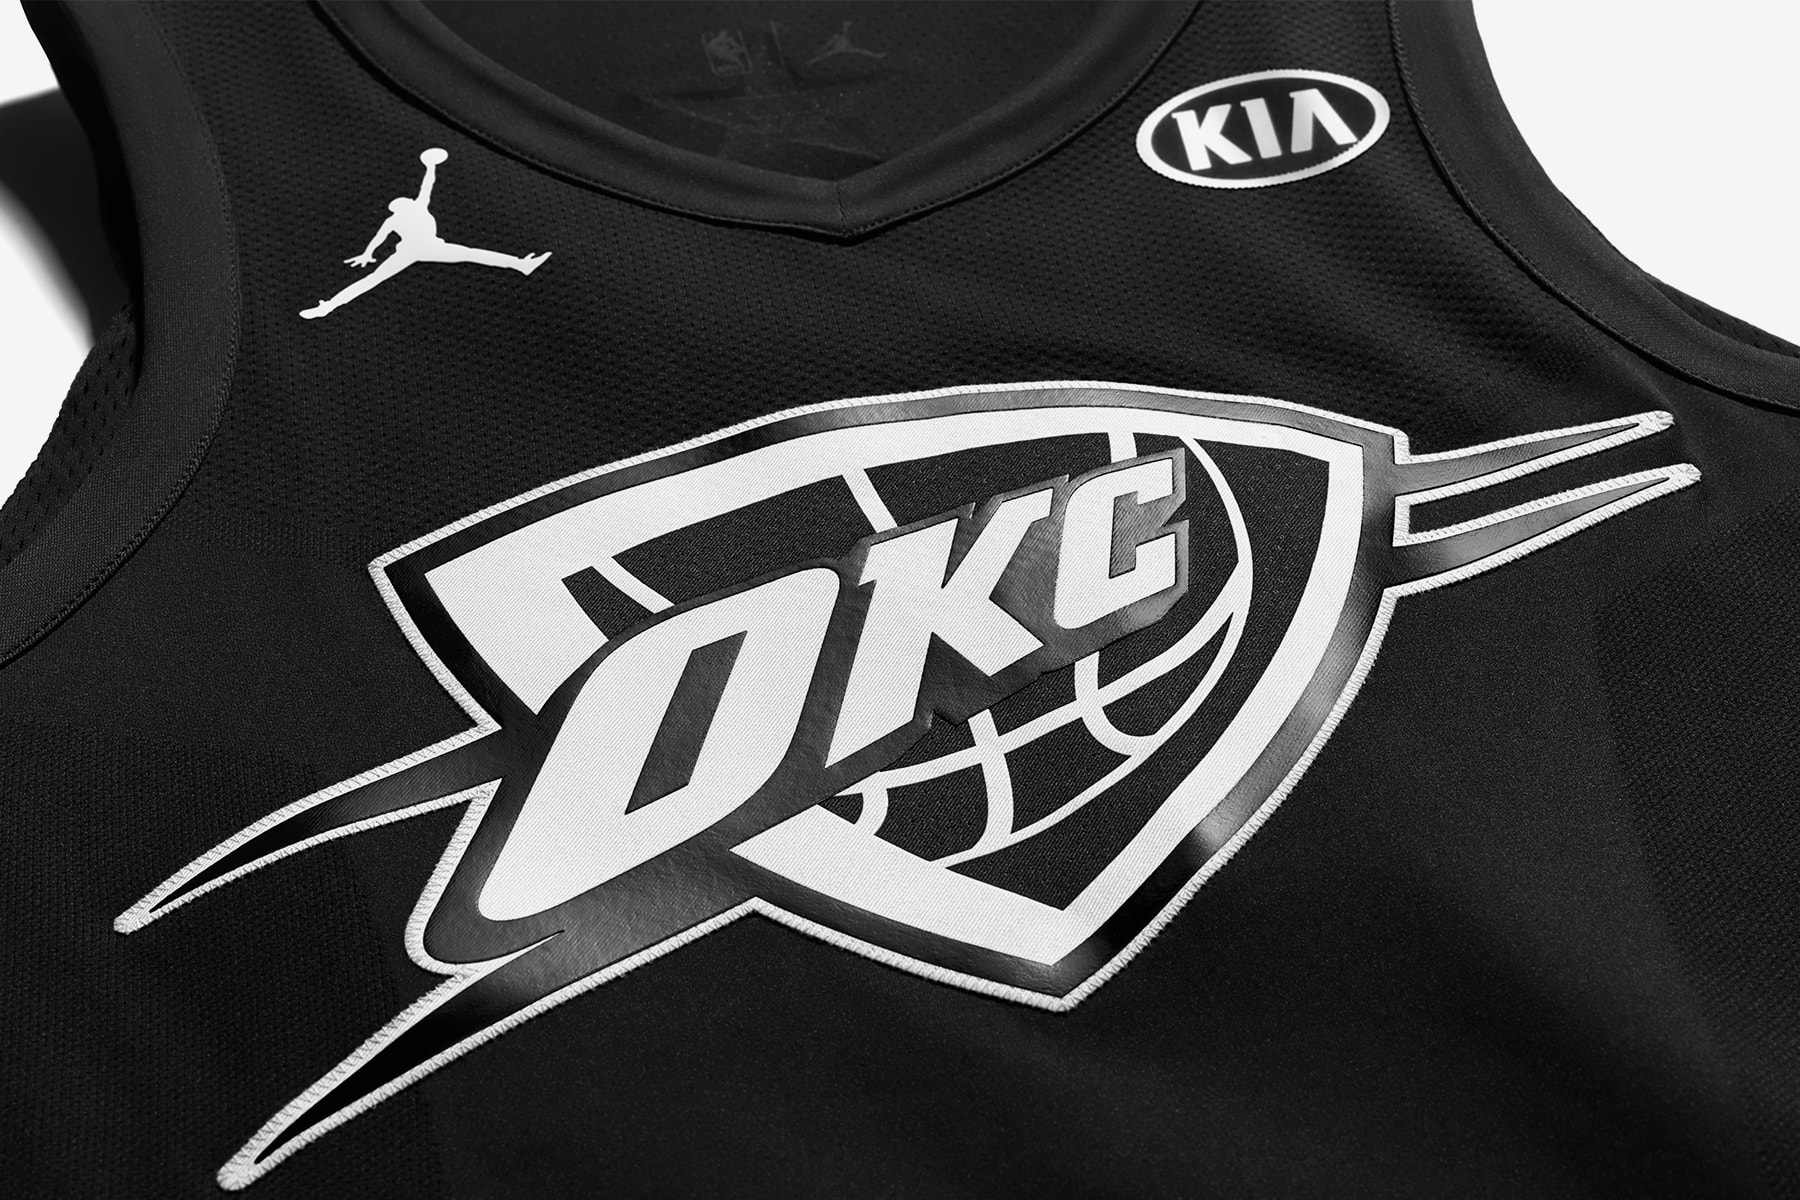 Jordan Brand 2018 NBA All-Star Game Uniforms Russell Westbrook OKC Oklahoma City Thunder